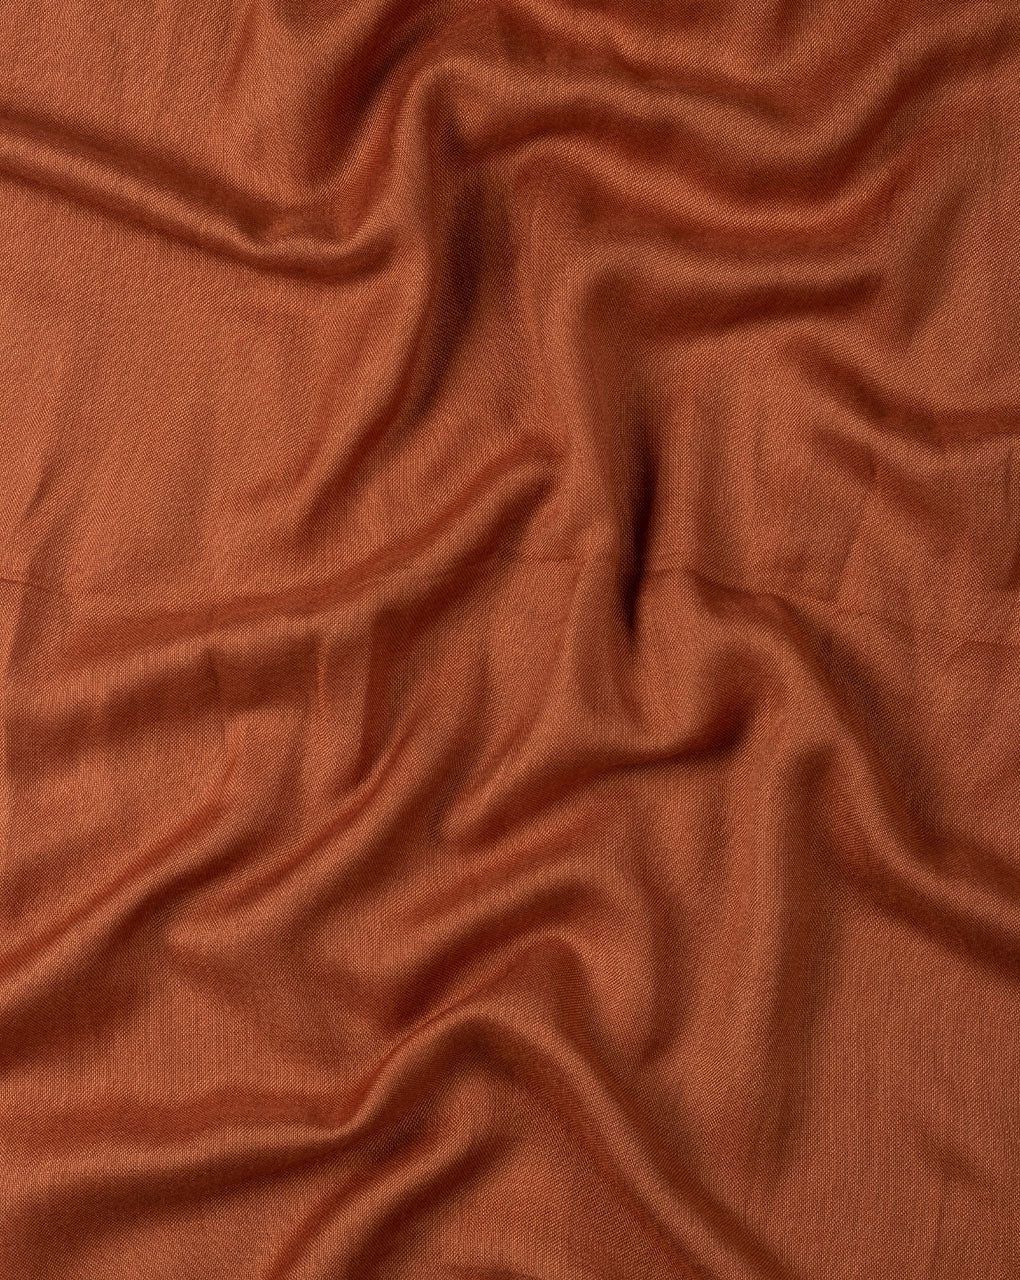 Brown Plain Woven Bhagalpuri Viscose Stole - Fabriclore.com